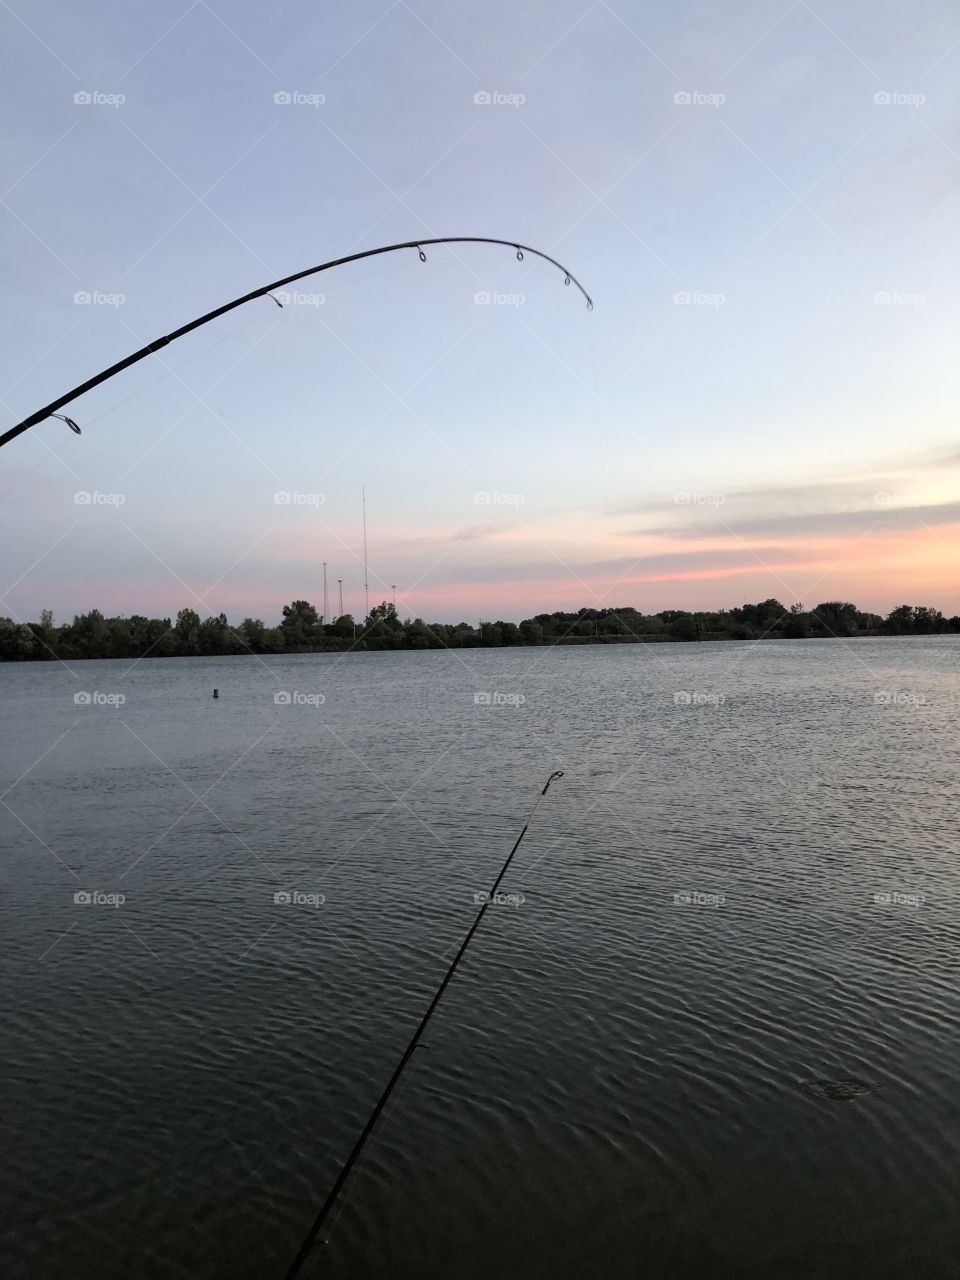 Big catch at sunset 